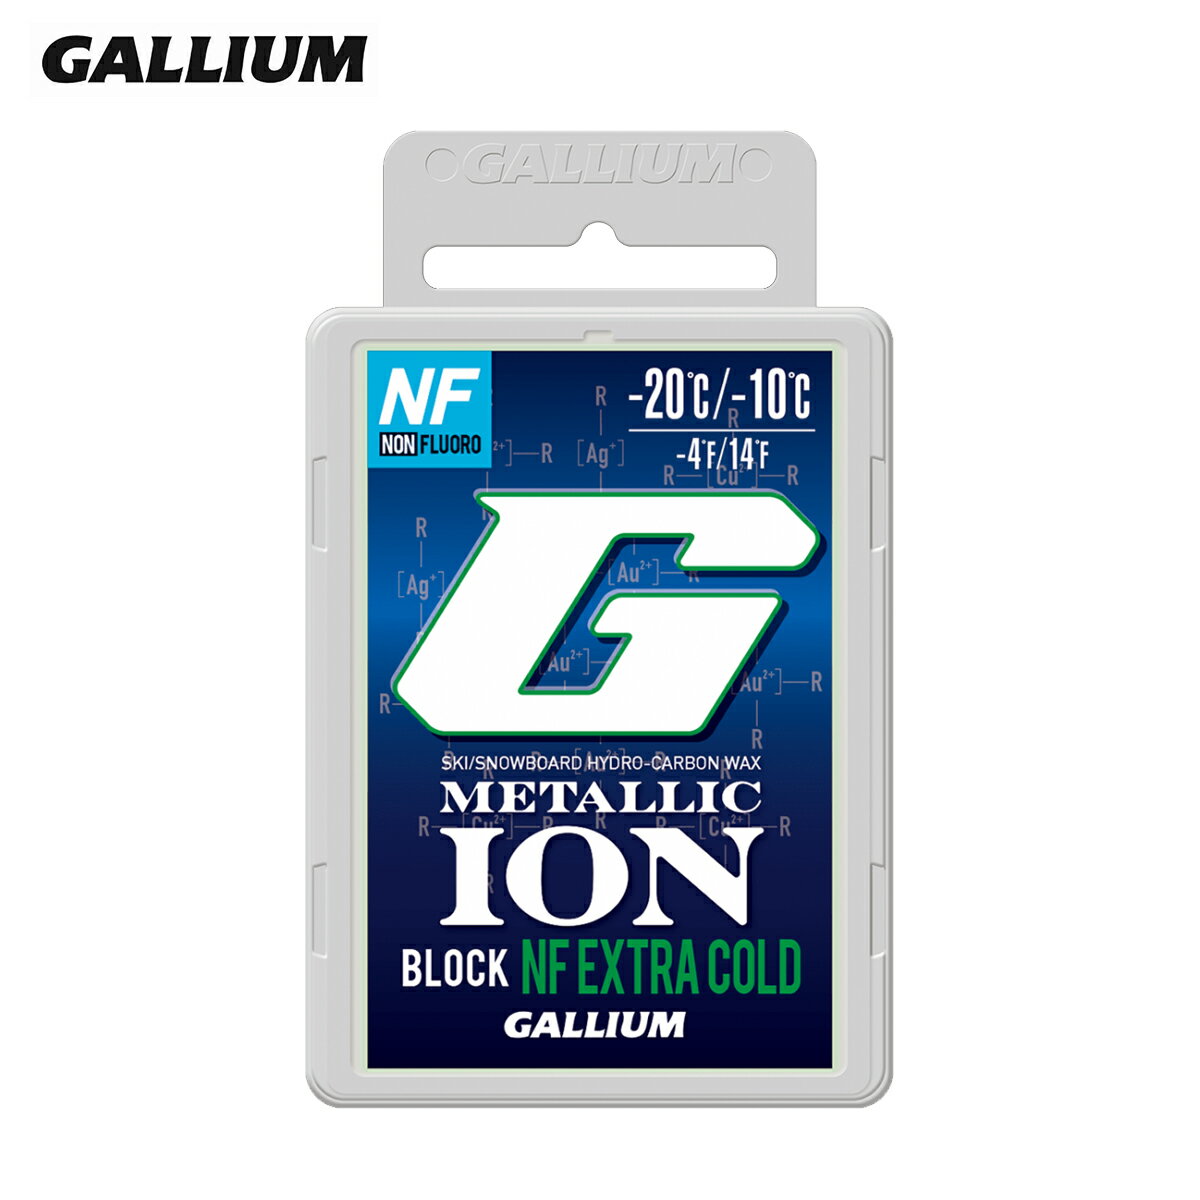 GALLIUM〔ガリウム ワックス〕＜2022＞GS5012 / METALLIC ION_BLOCK NF EXTRA COLD 50g 固形 スキー スノーボード スノボ